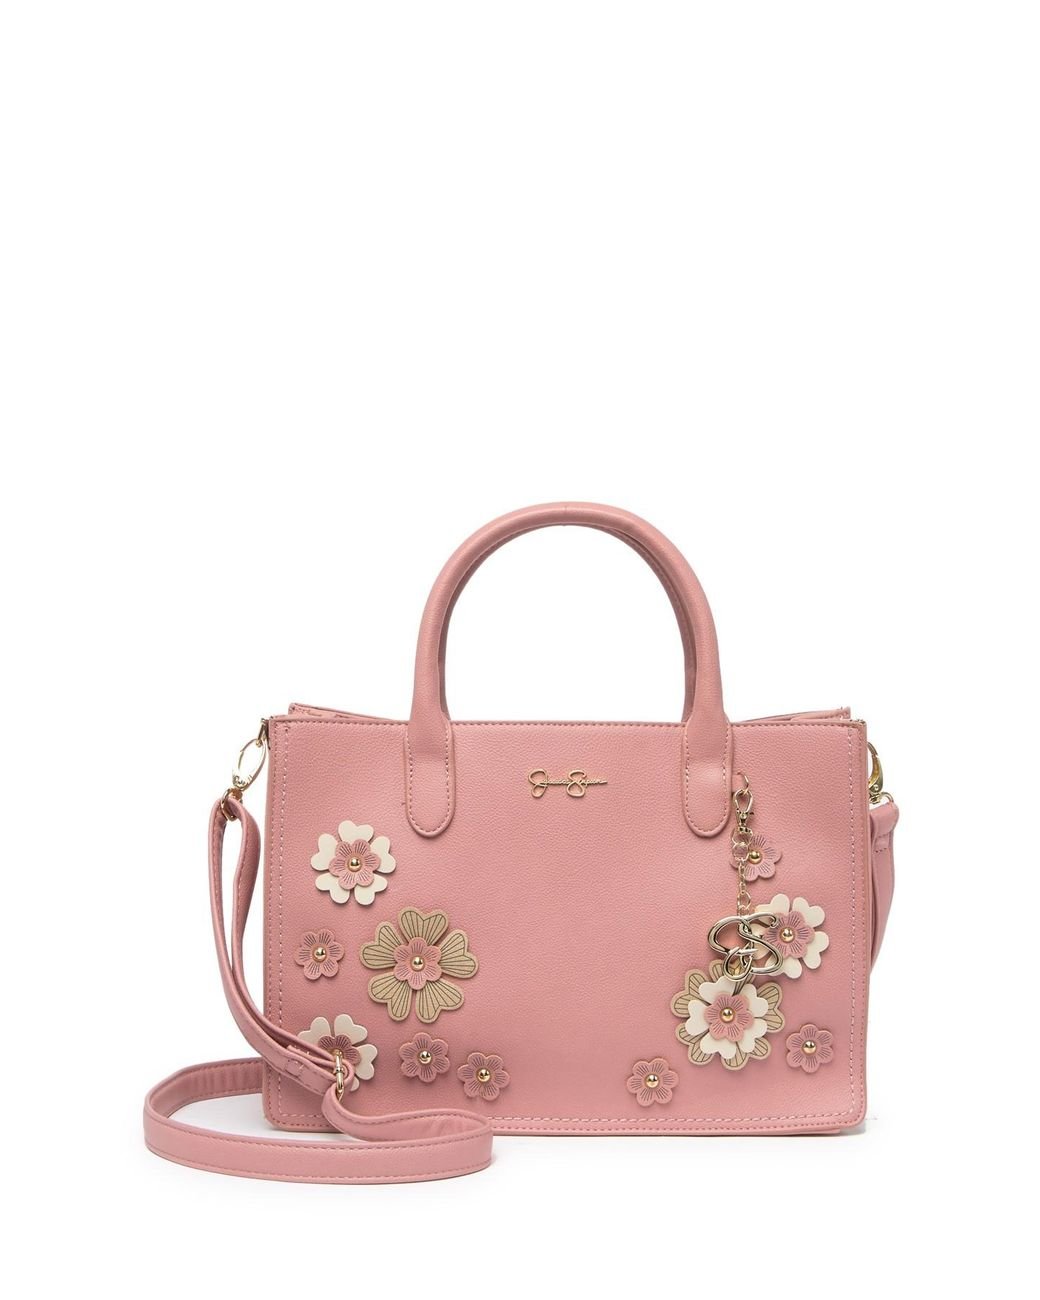 Jessica Simpson Rosalie Floral Applique Satchel Bag in Pink